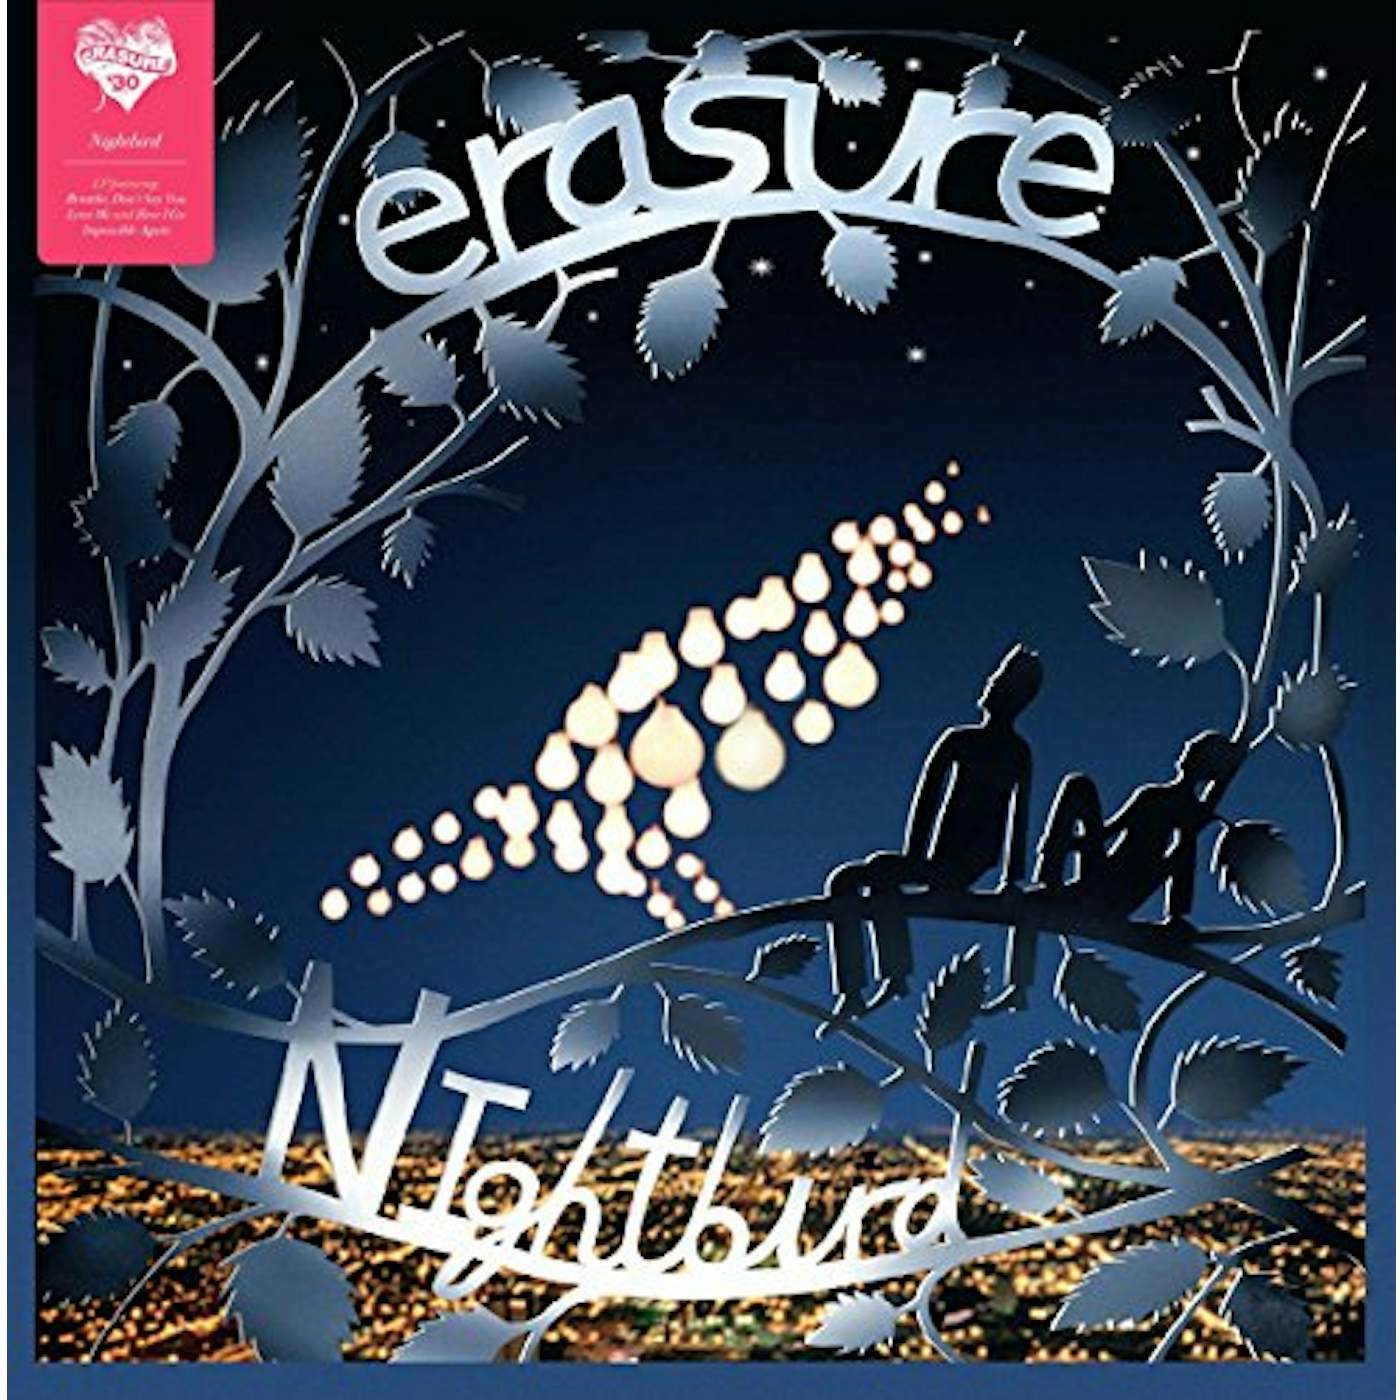 Erasure NIGHTBIRD (180G VINYL) Vinyl Record